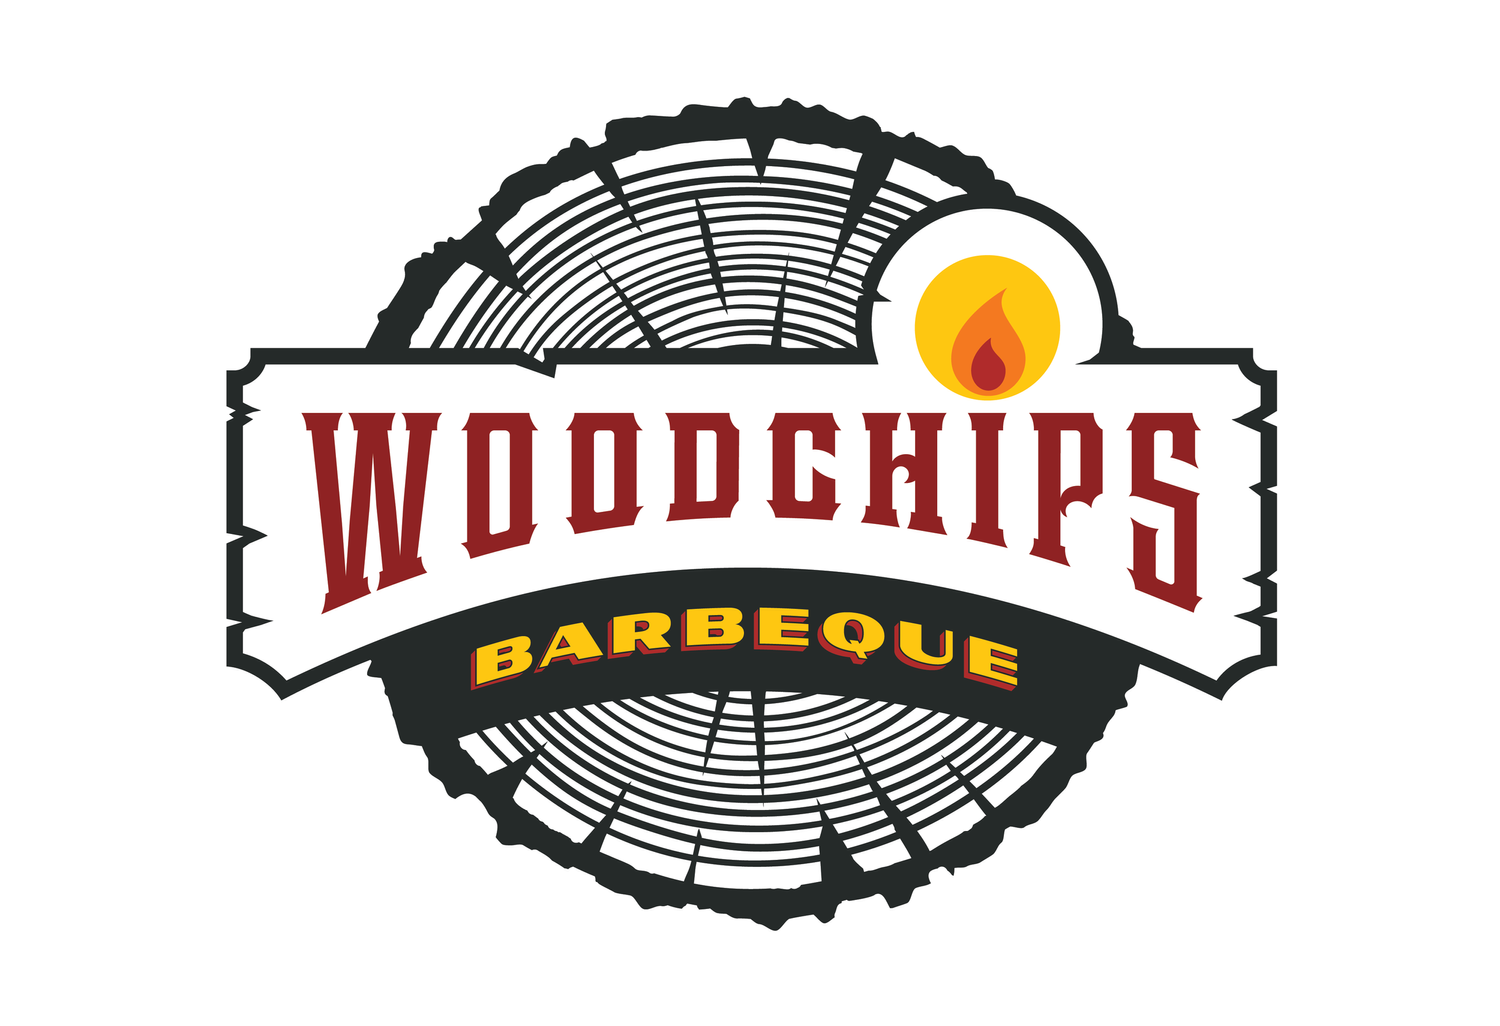  Woodchips BBQ